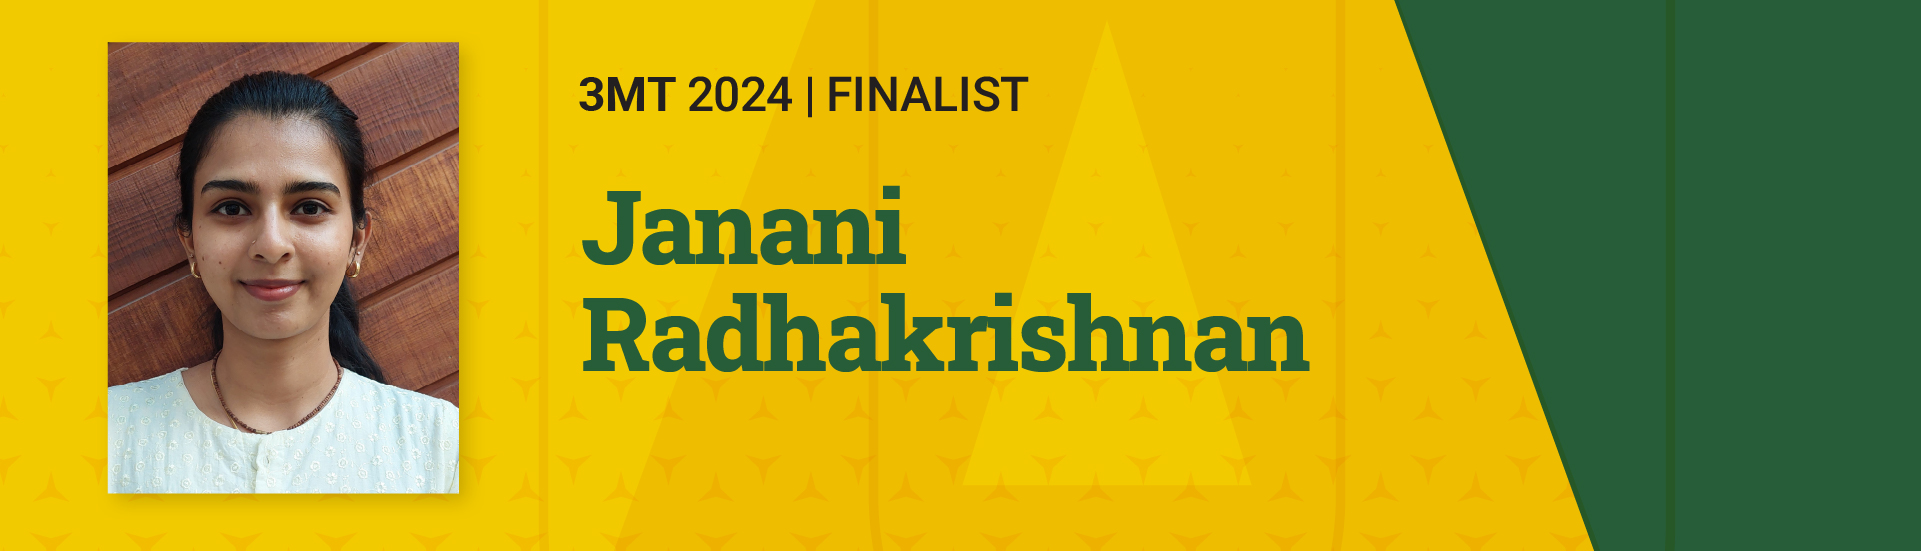 3MT 2024 Finalist Janani Radhakrishnan